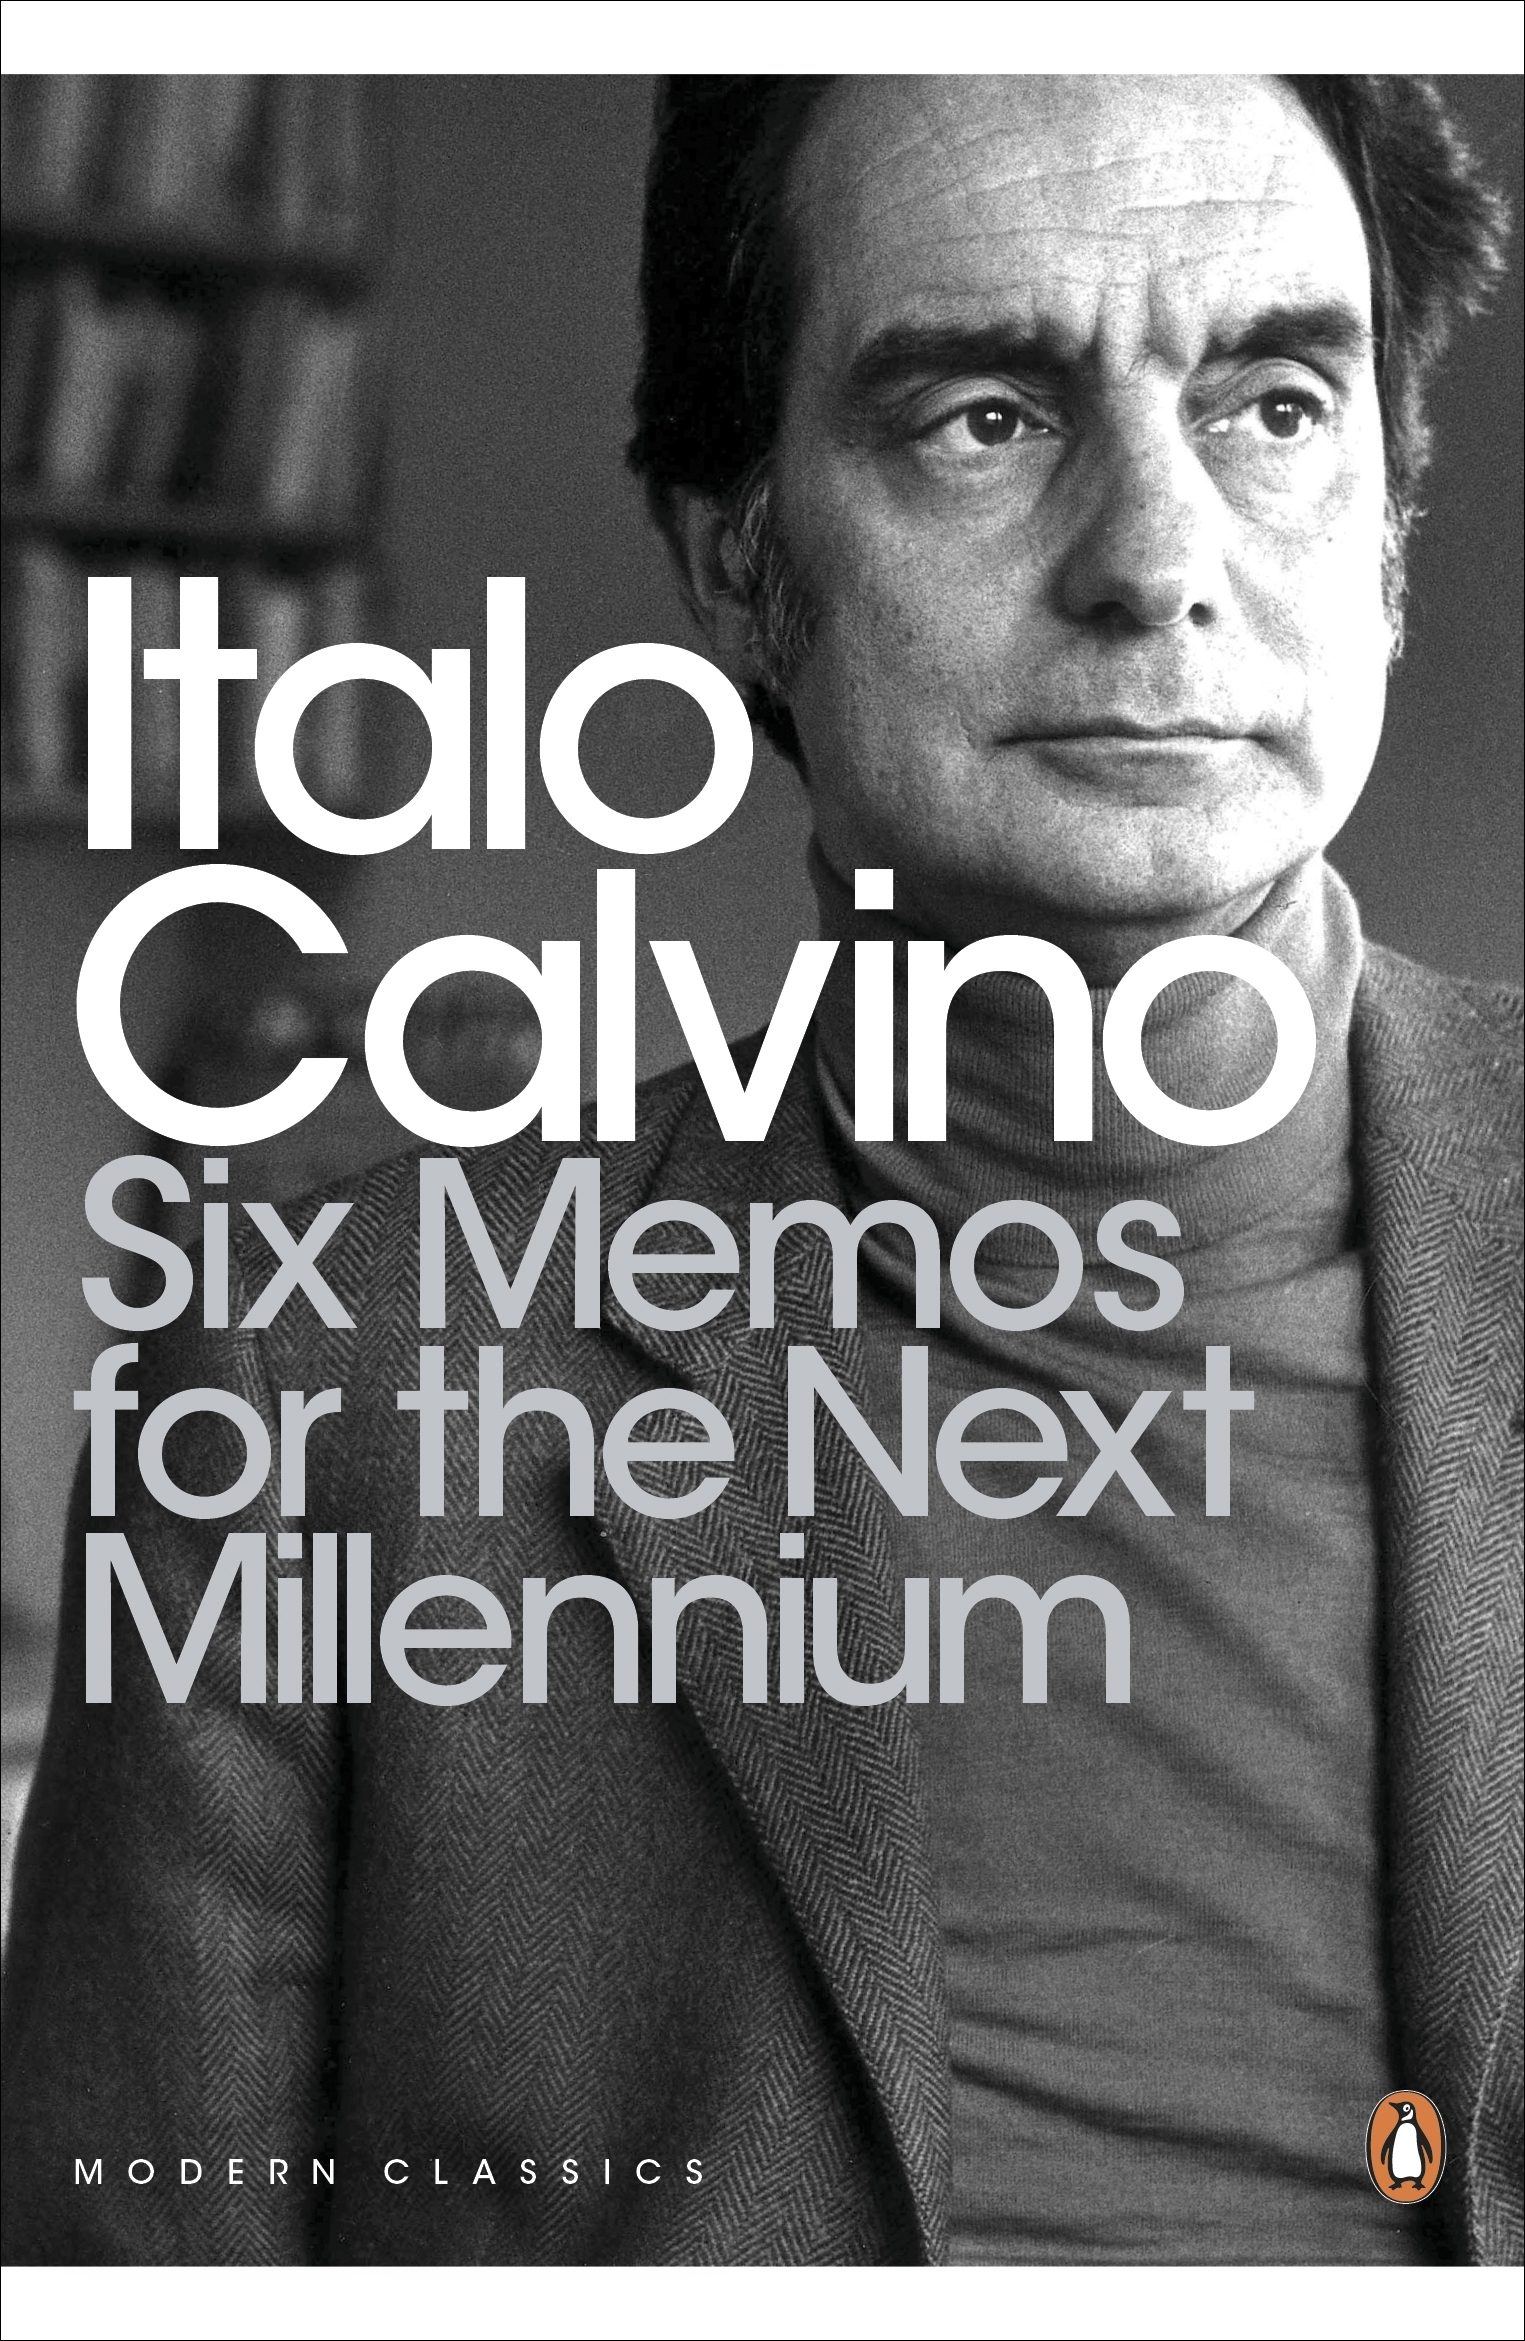 Six Memos for the Next Millennium by Italo Calvino ...